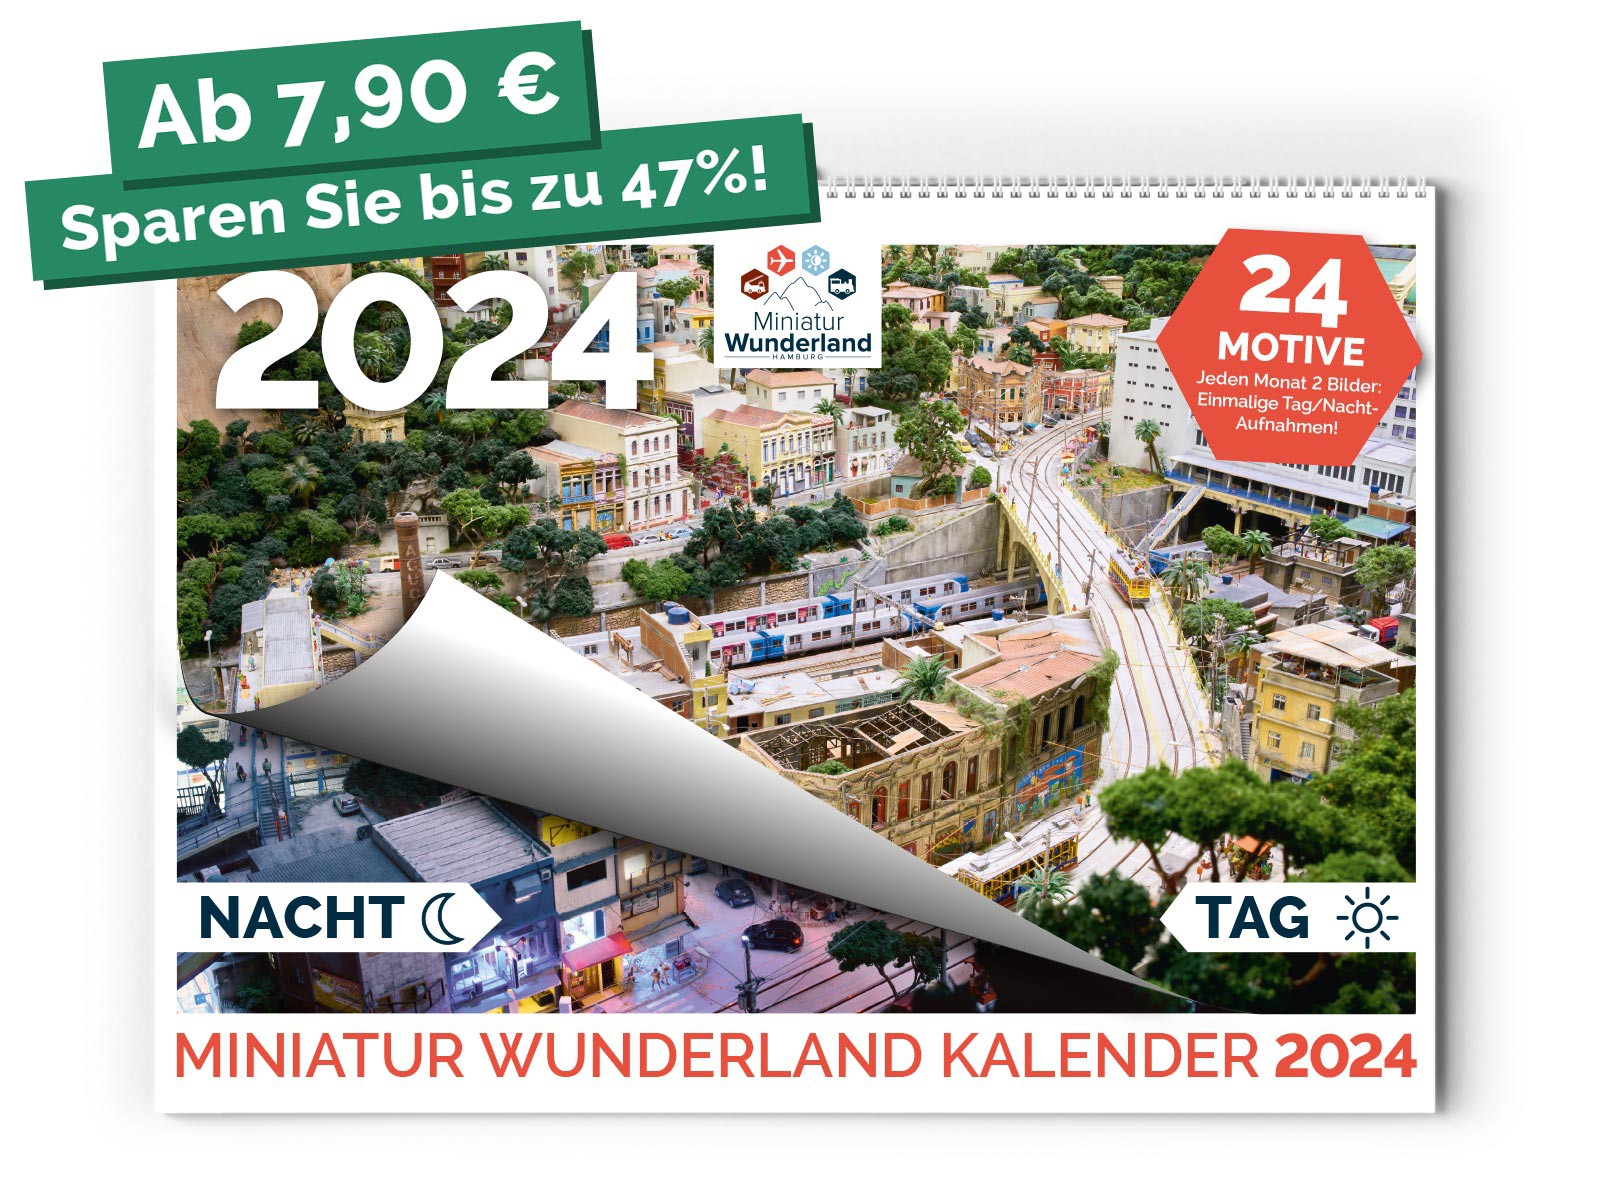 Miniatur Wunderland Kalender 2024